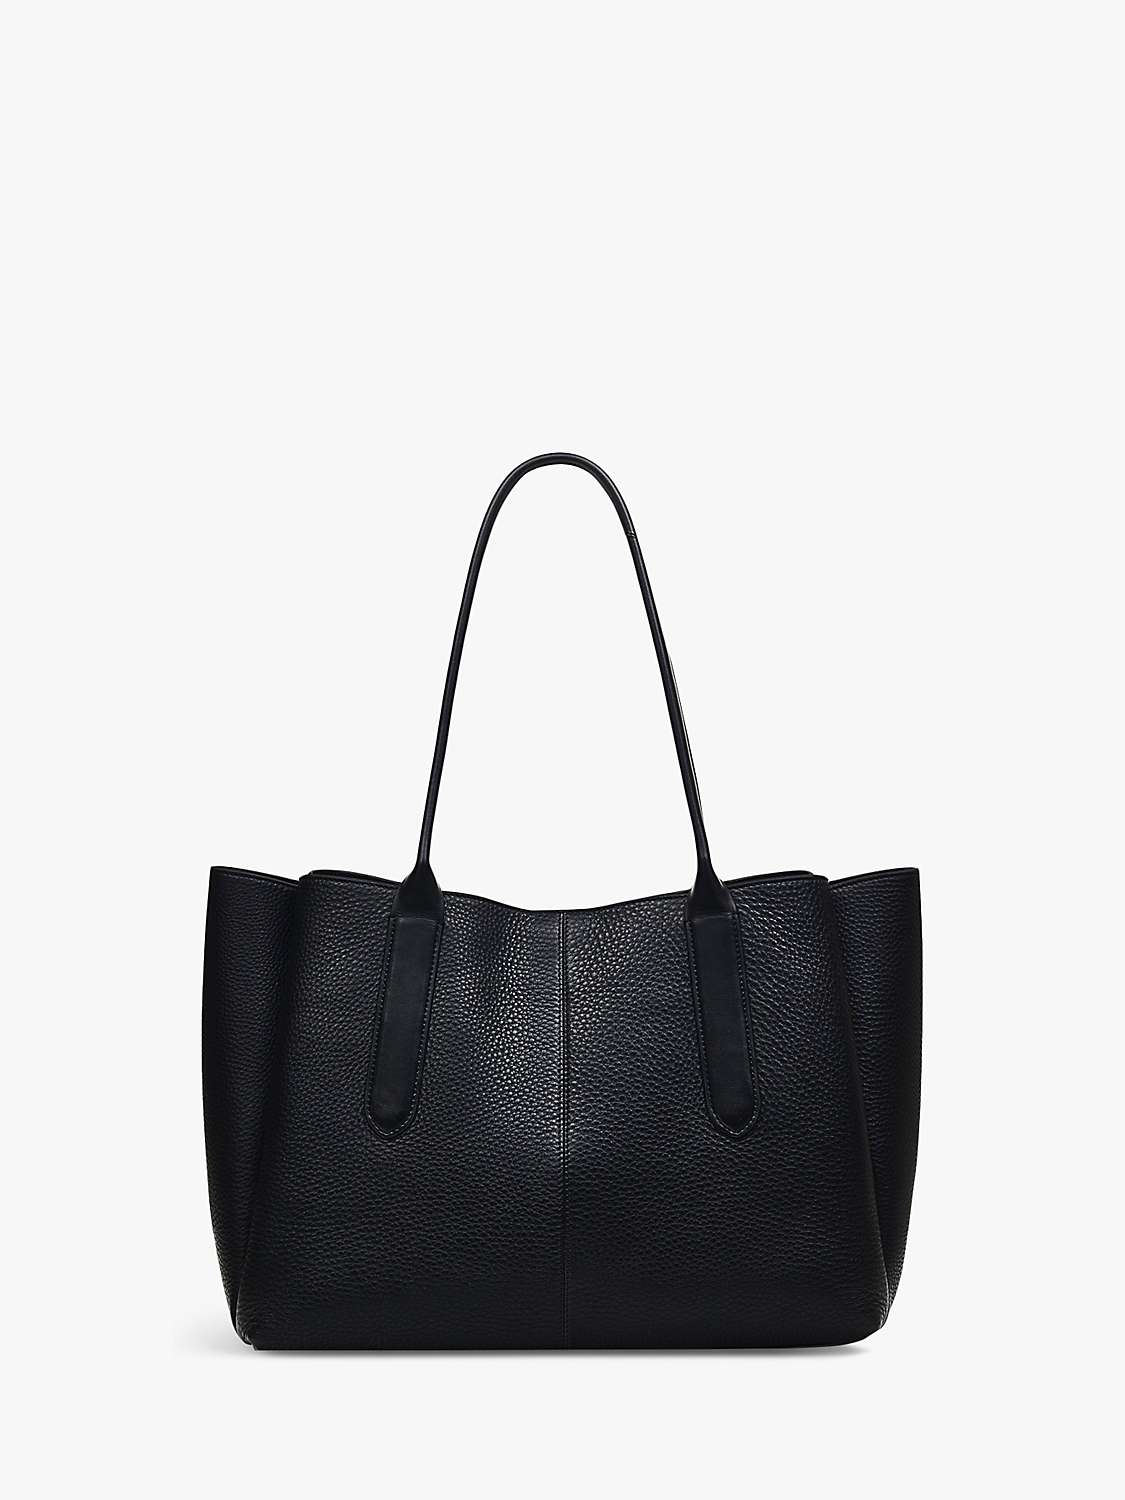 Radley Hillgate Place Leather Tote Bag, Black at John Lewis & Partners